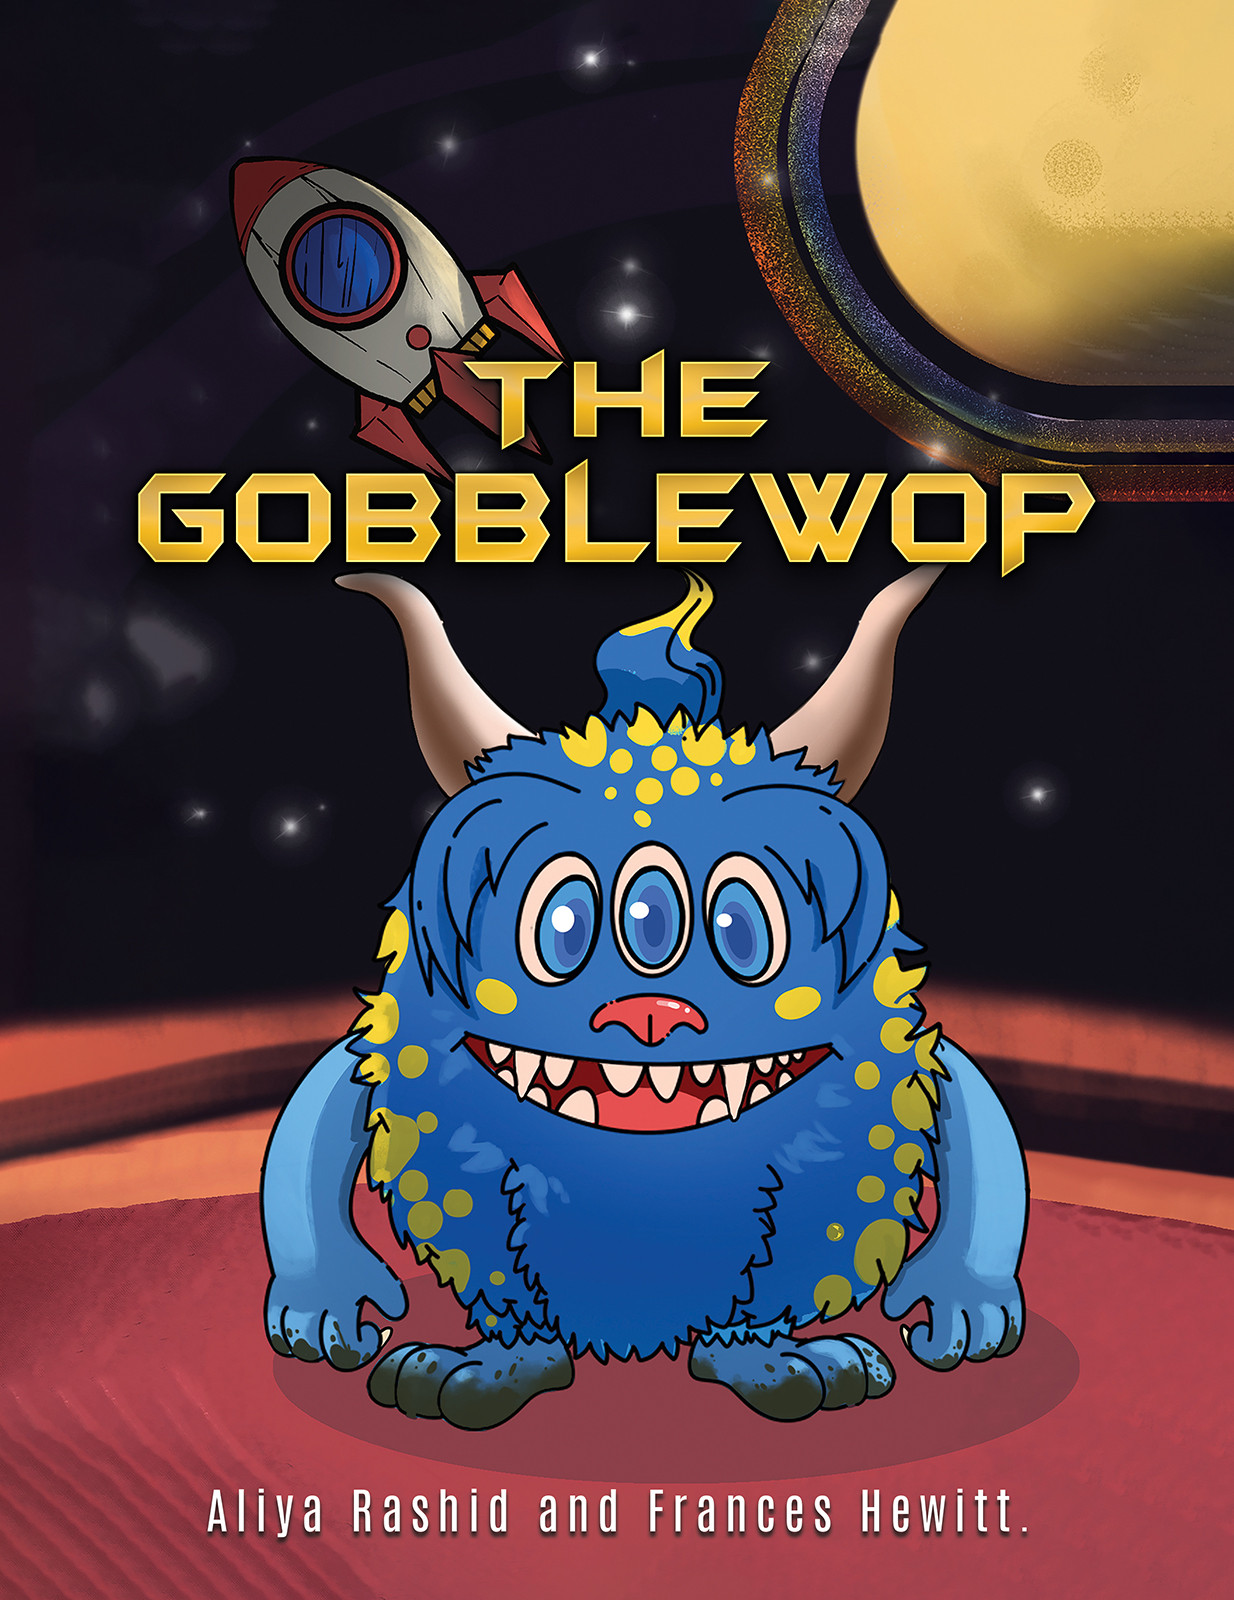 The Gobblewop